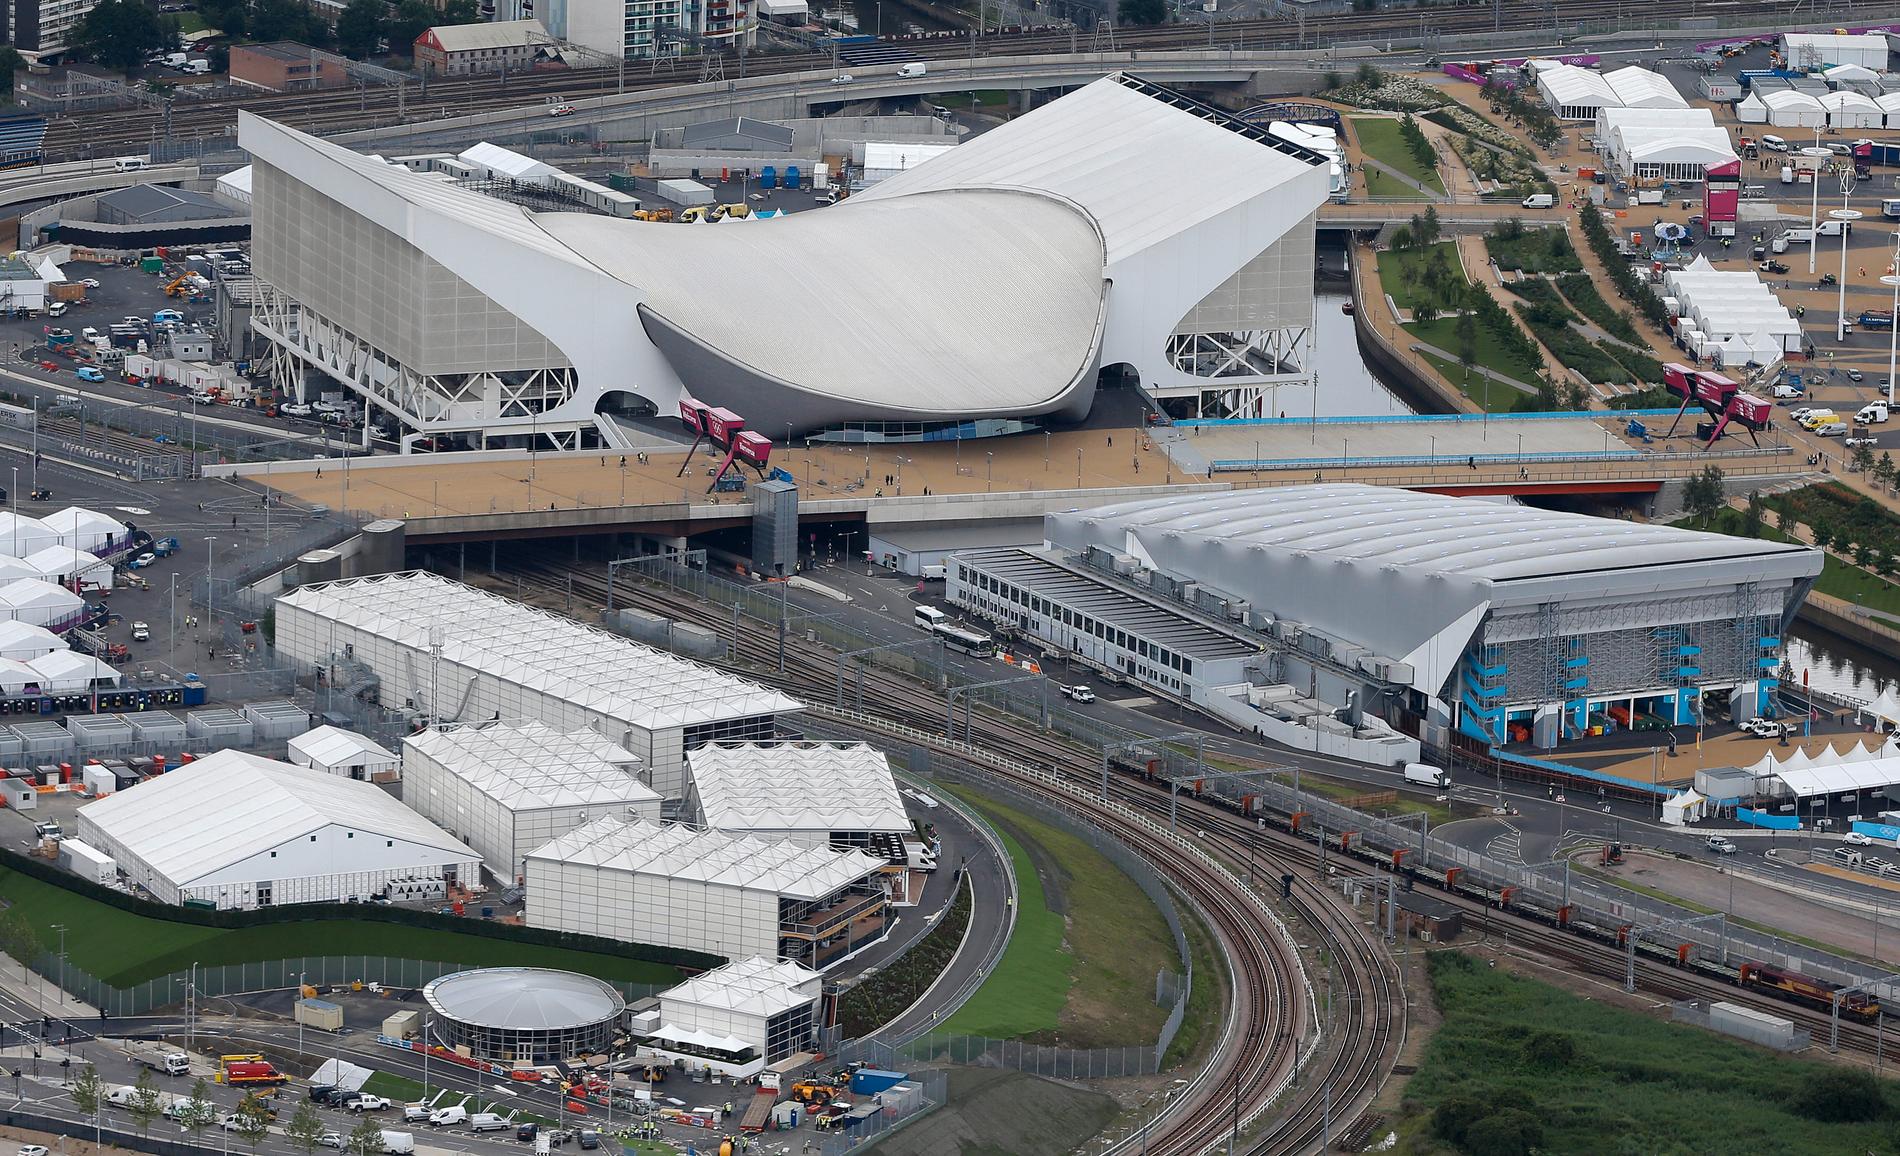 Samma arkitektfirma ritade Aquatic Centre till London-OS 2012.